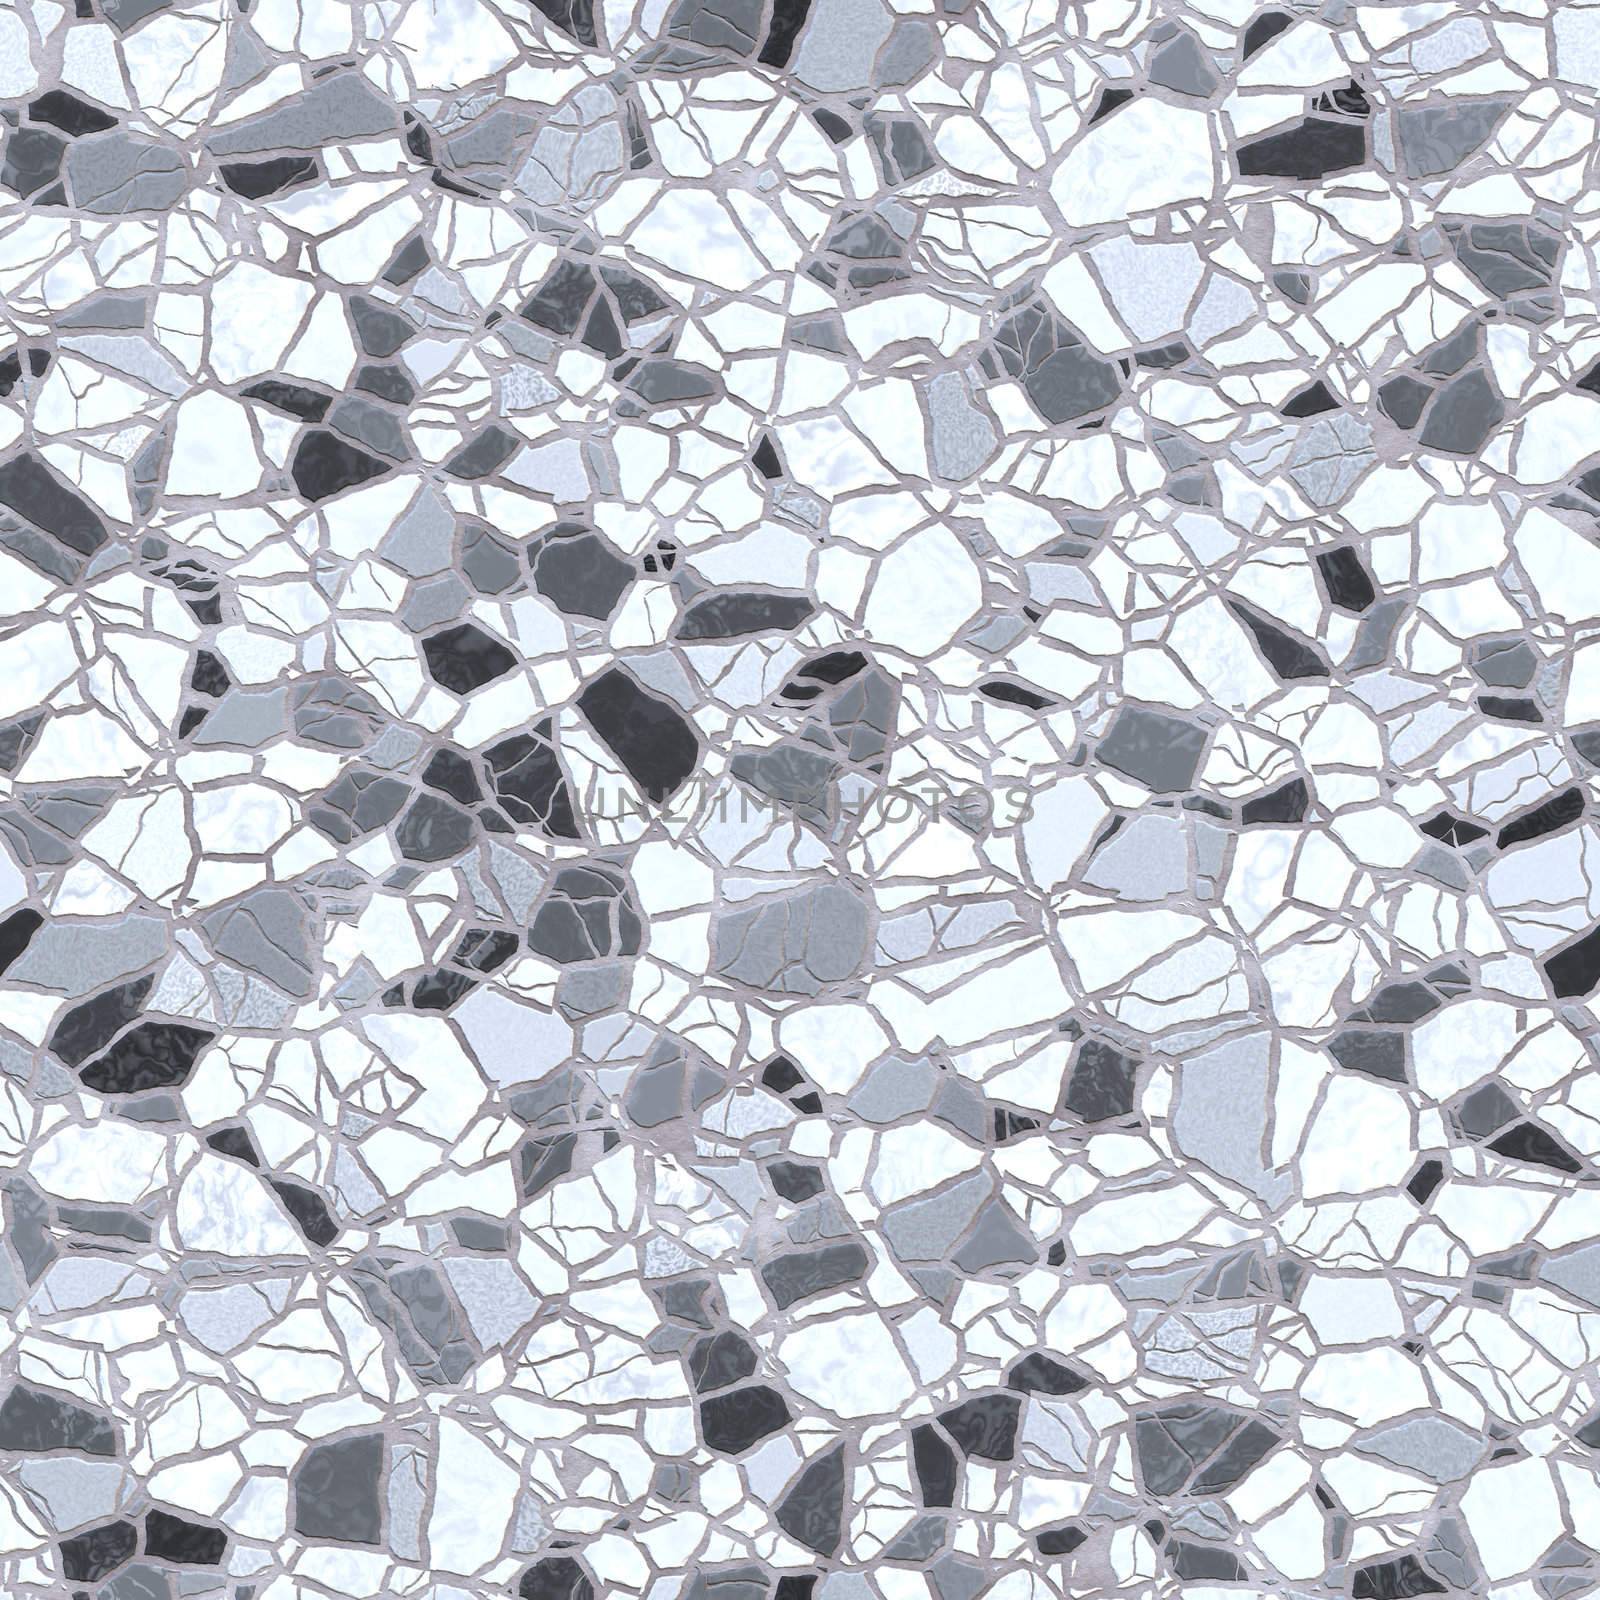 An illustration of a seamless tiles texture